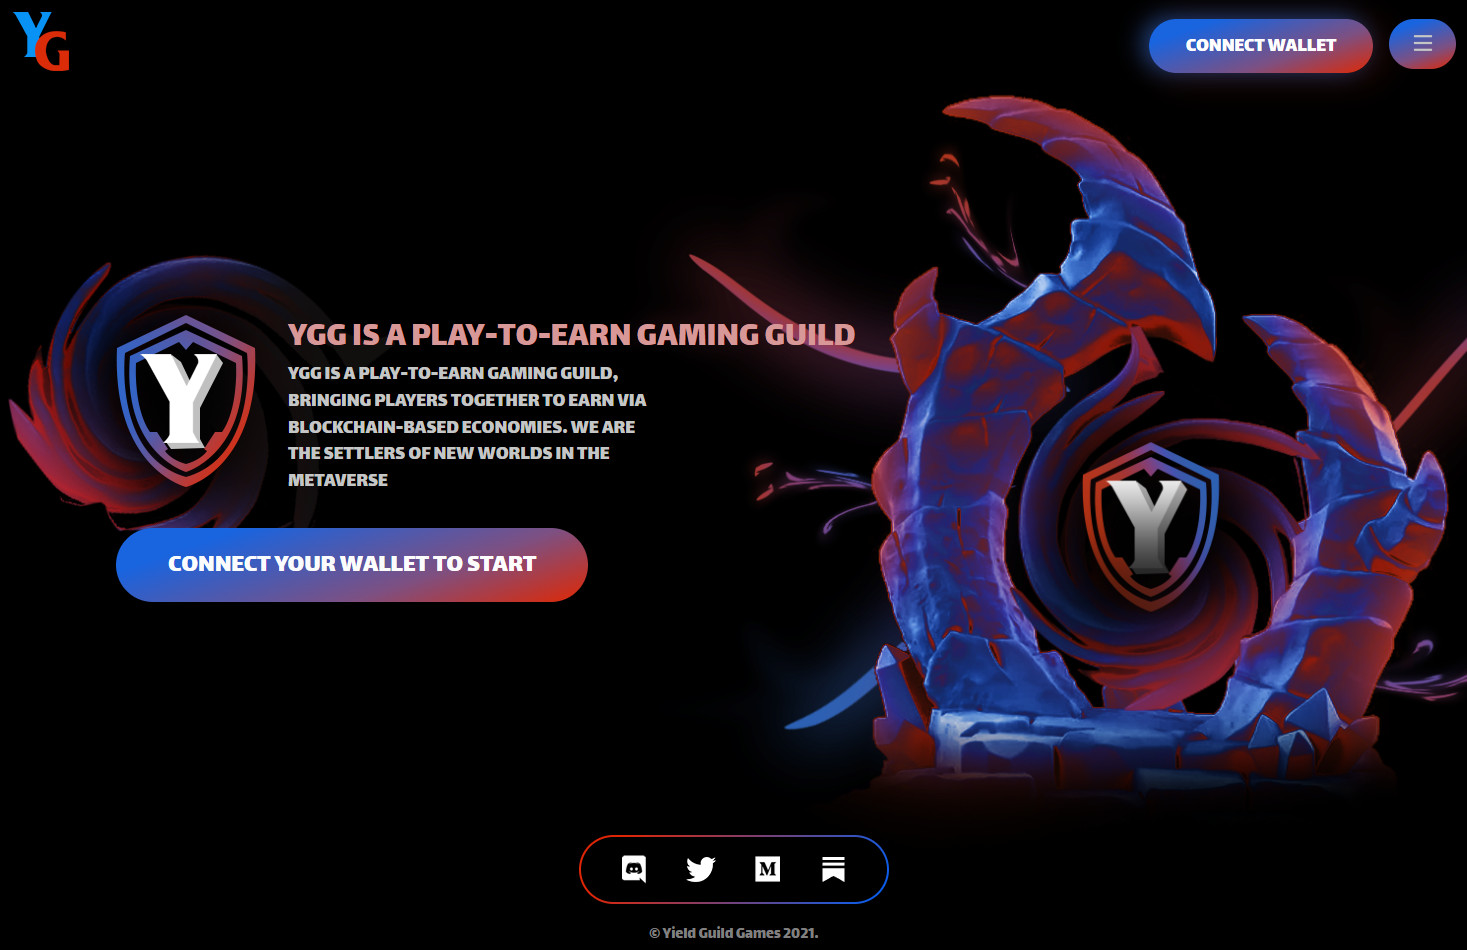 yield guild games ygg metaverse gaming guild